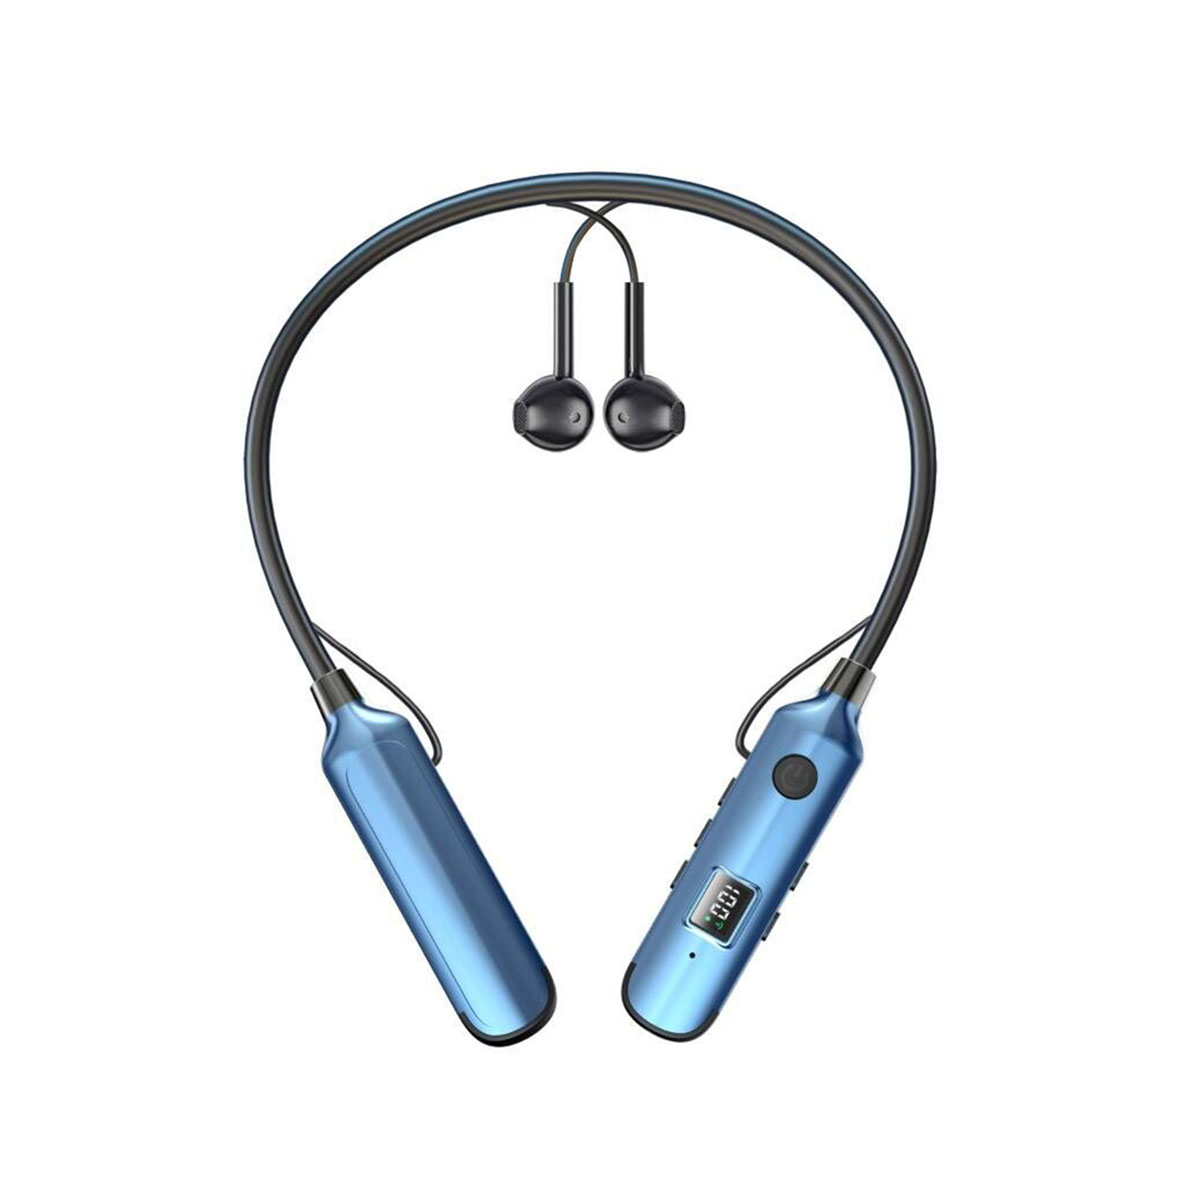 ENBAOXIN Drahtloses Soundkarte, mit In-ear Fernbedienung, - Headset Blau Bluetooth Headset Kopfhörer drahtlose drahtlose